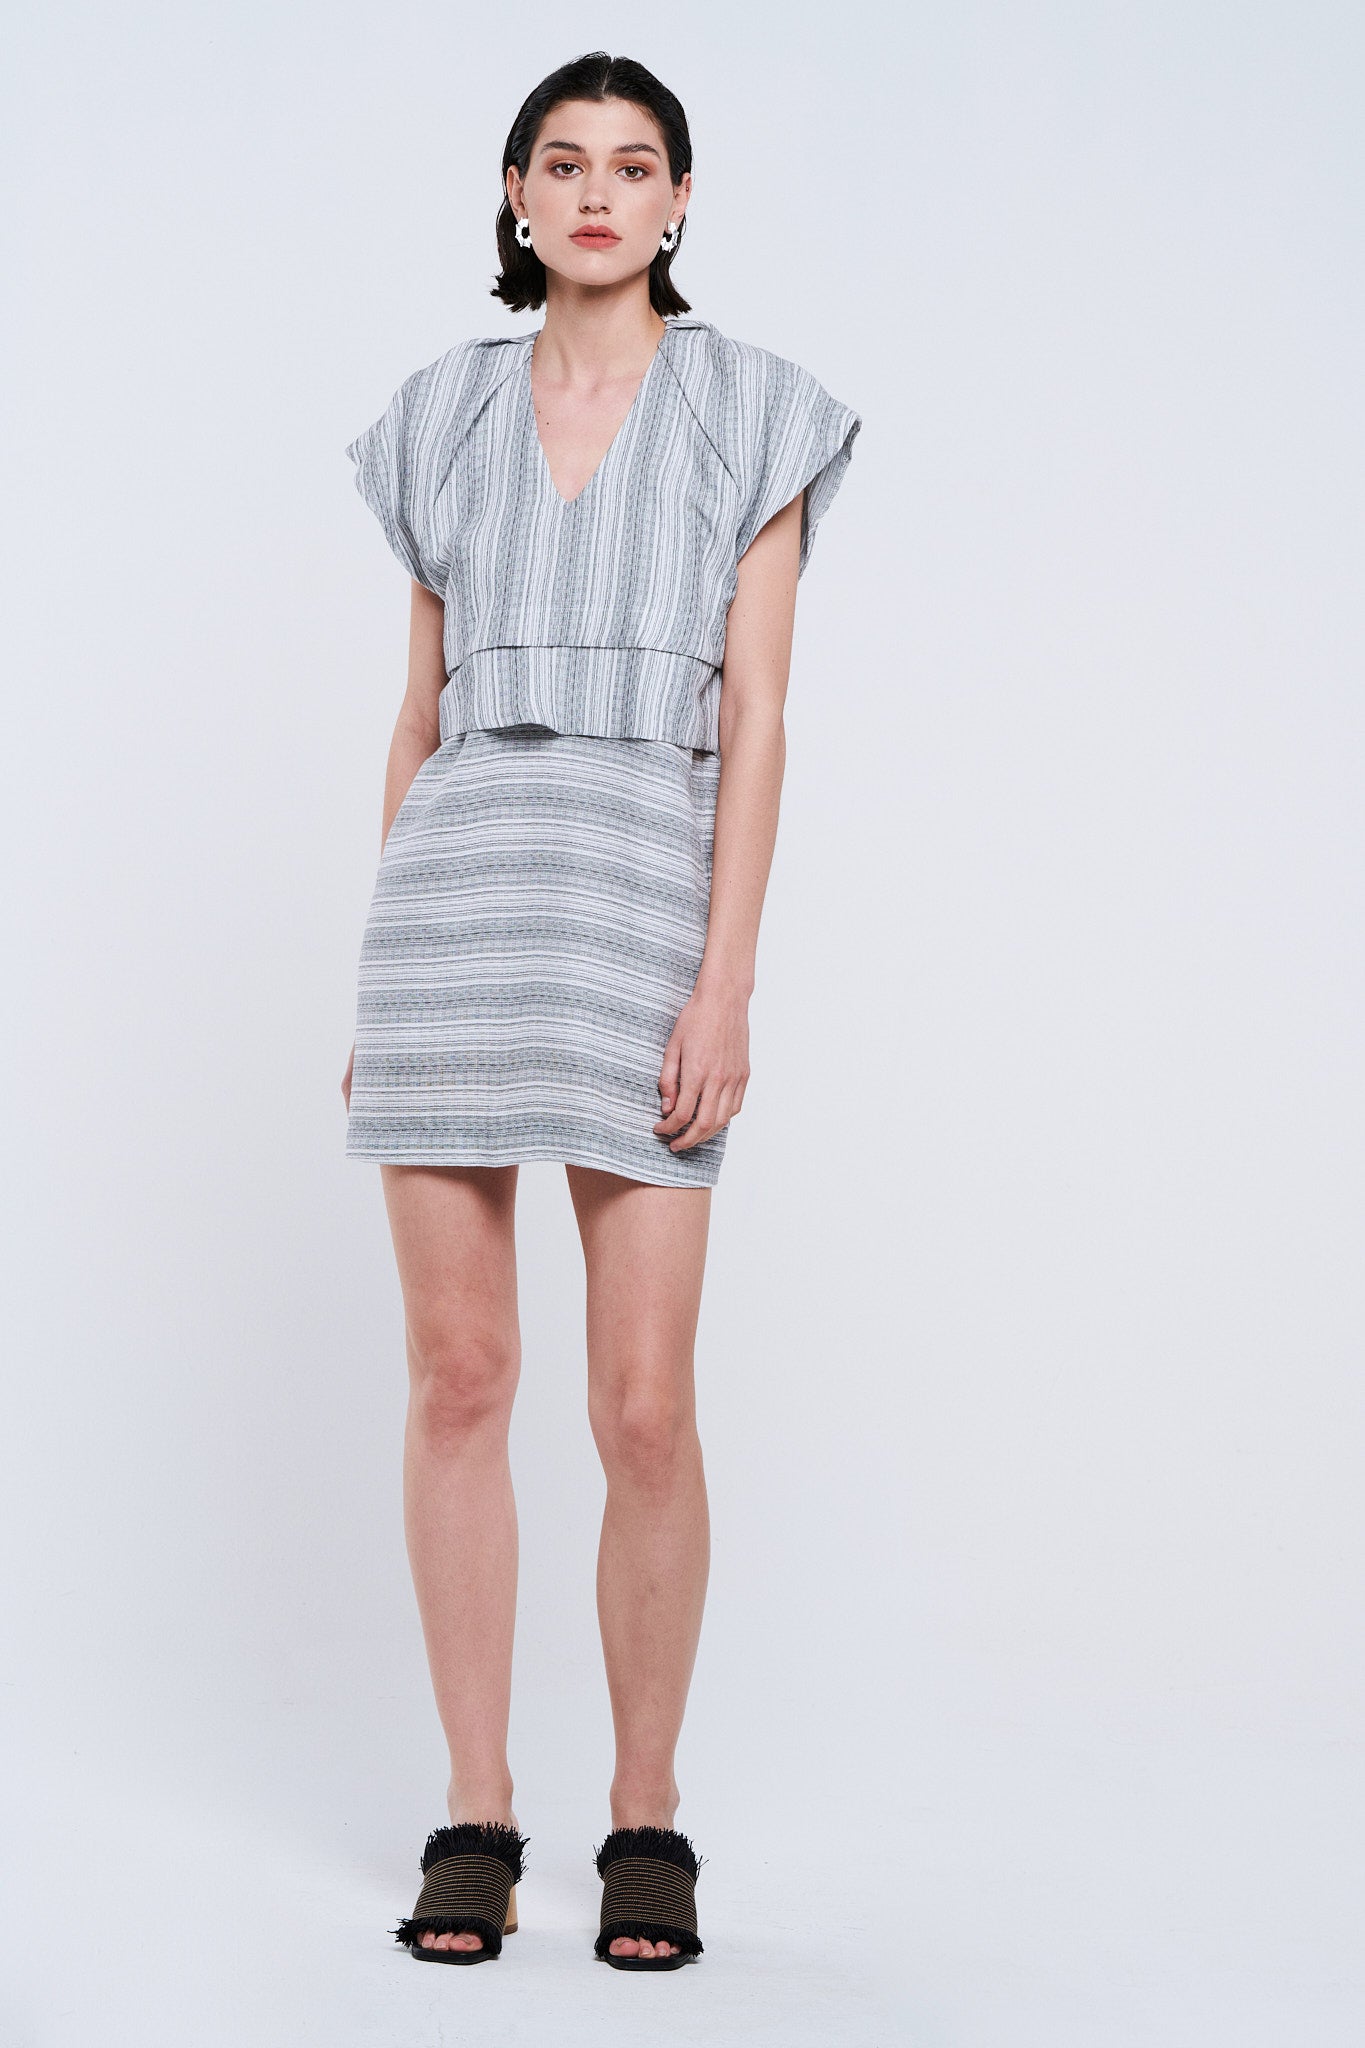 Short gray striped dress